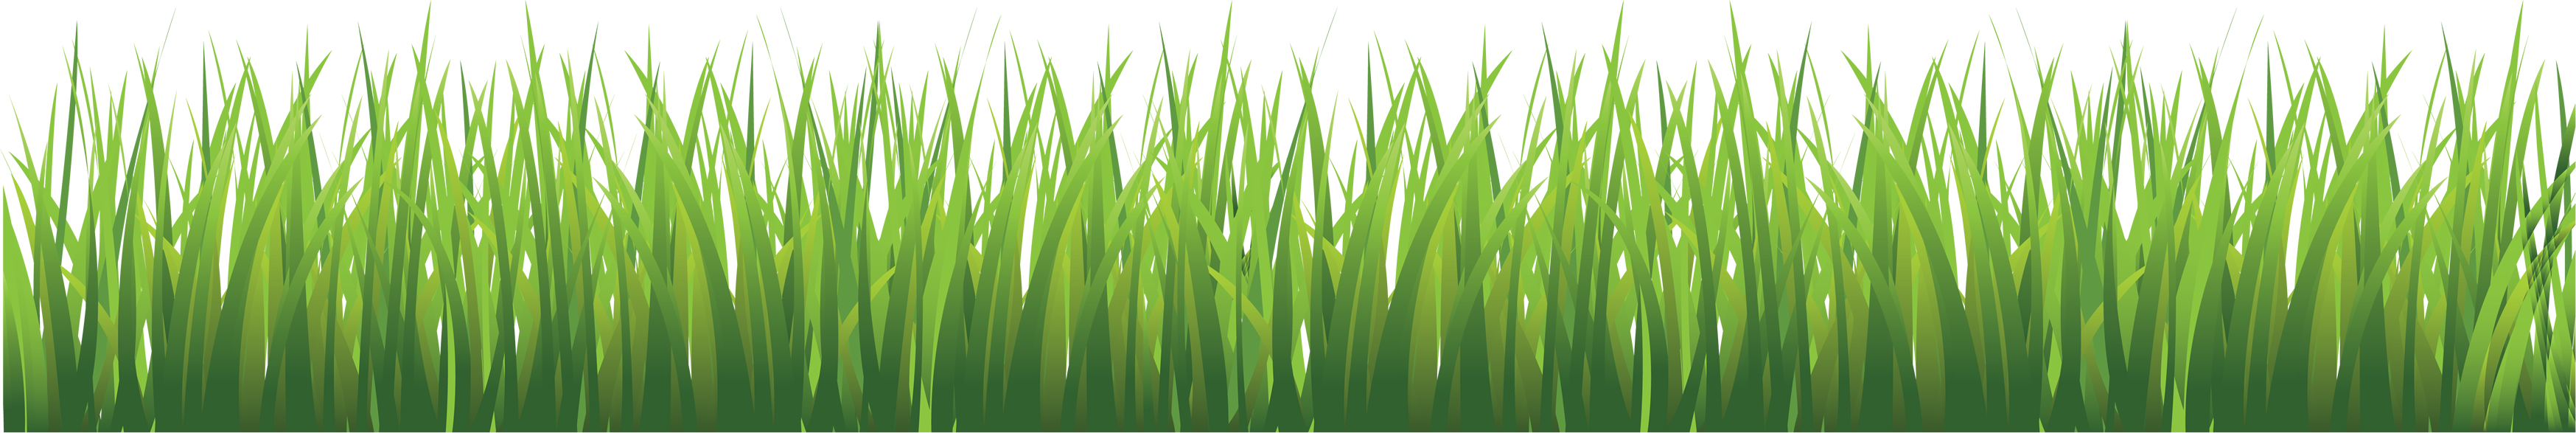 Grass transparent background